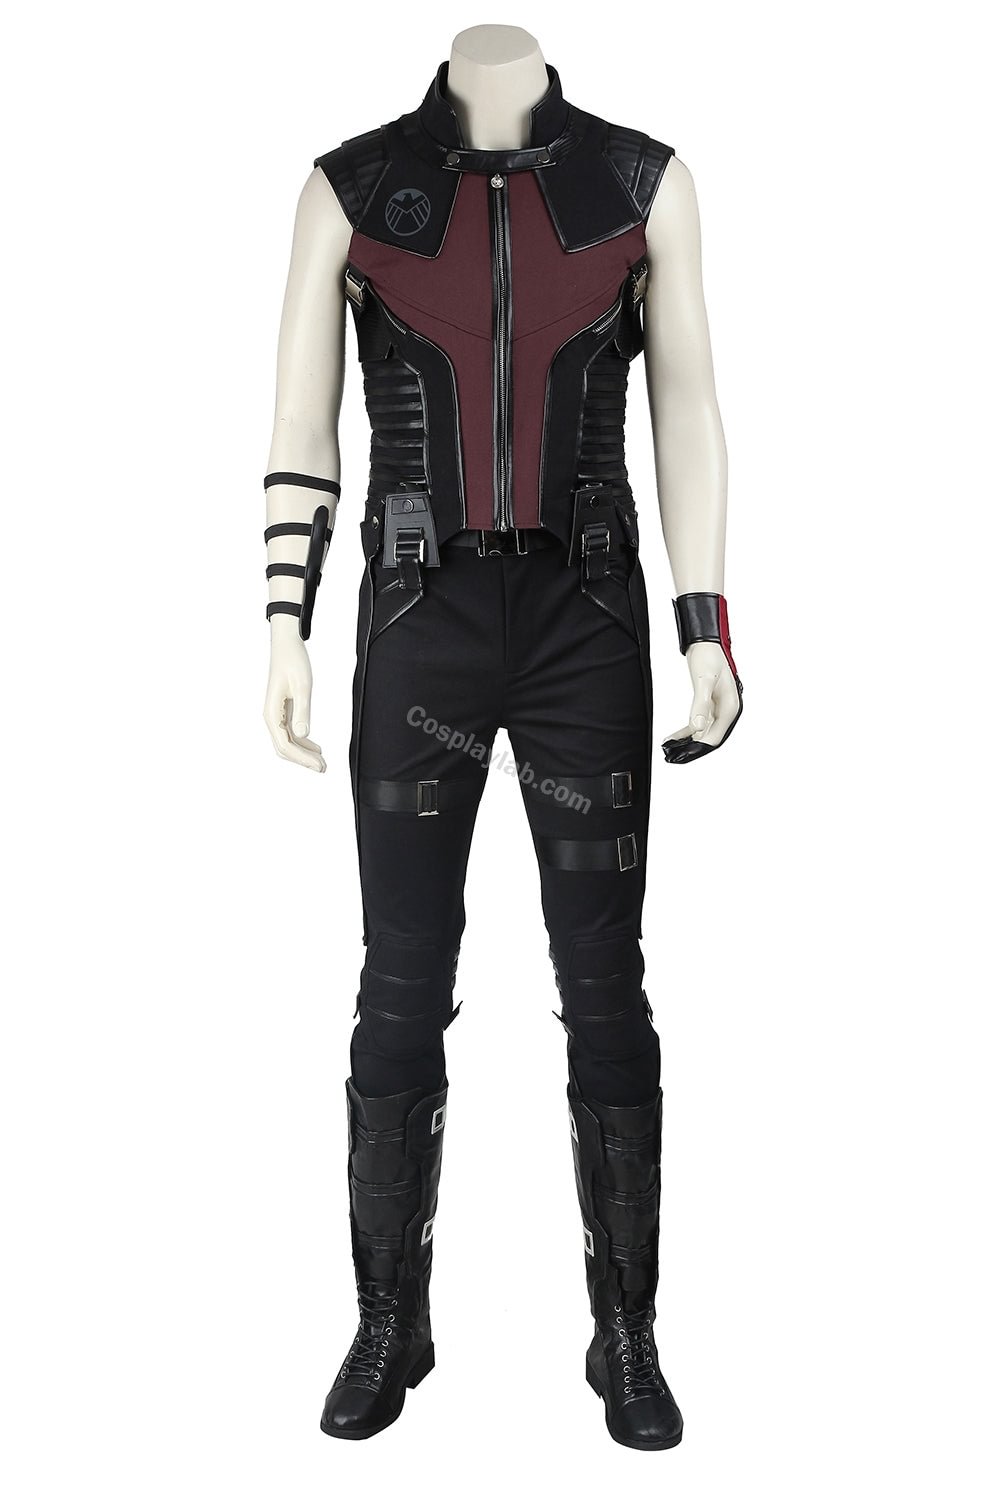 Captain America Civil War Hawkeye Clint Barton Cosplay Costume By CosplayLab